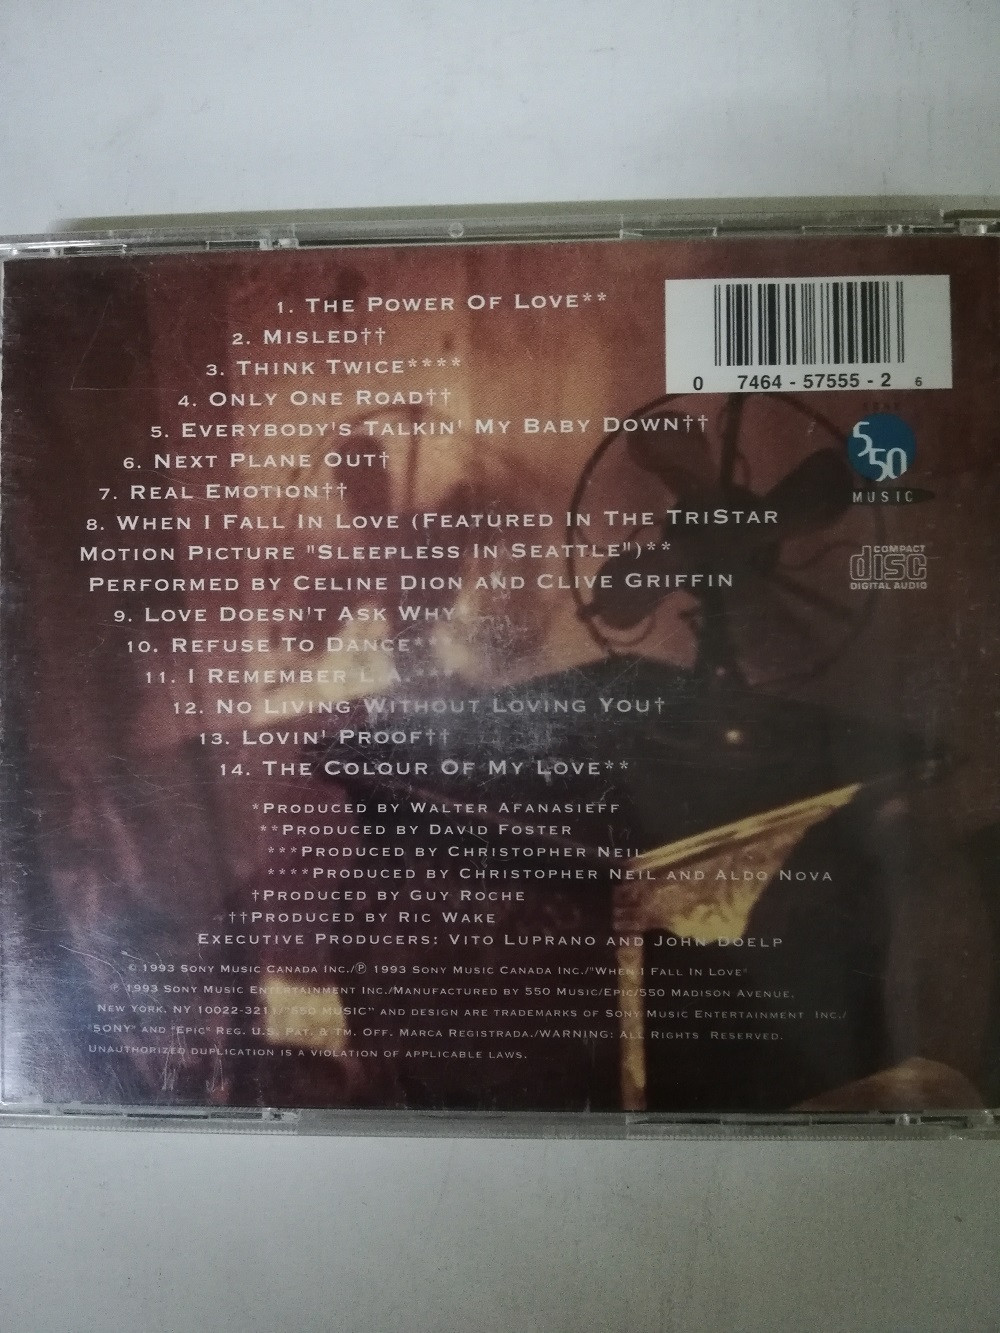 Imagen CD CELINE DION - THE COLOUR OF MY LOVE 2